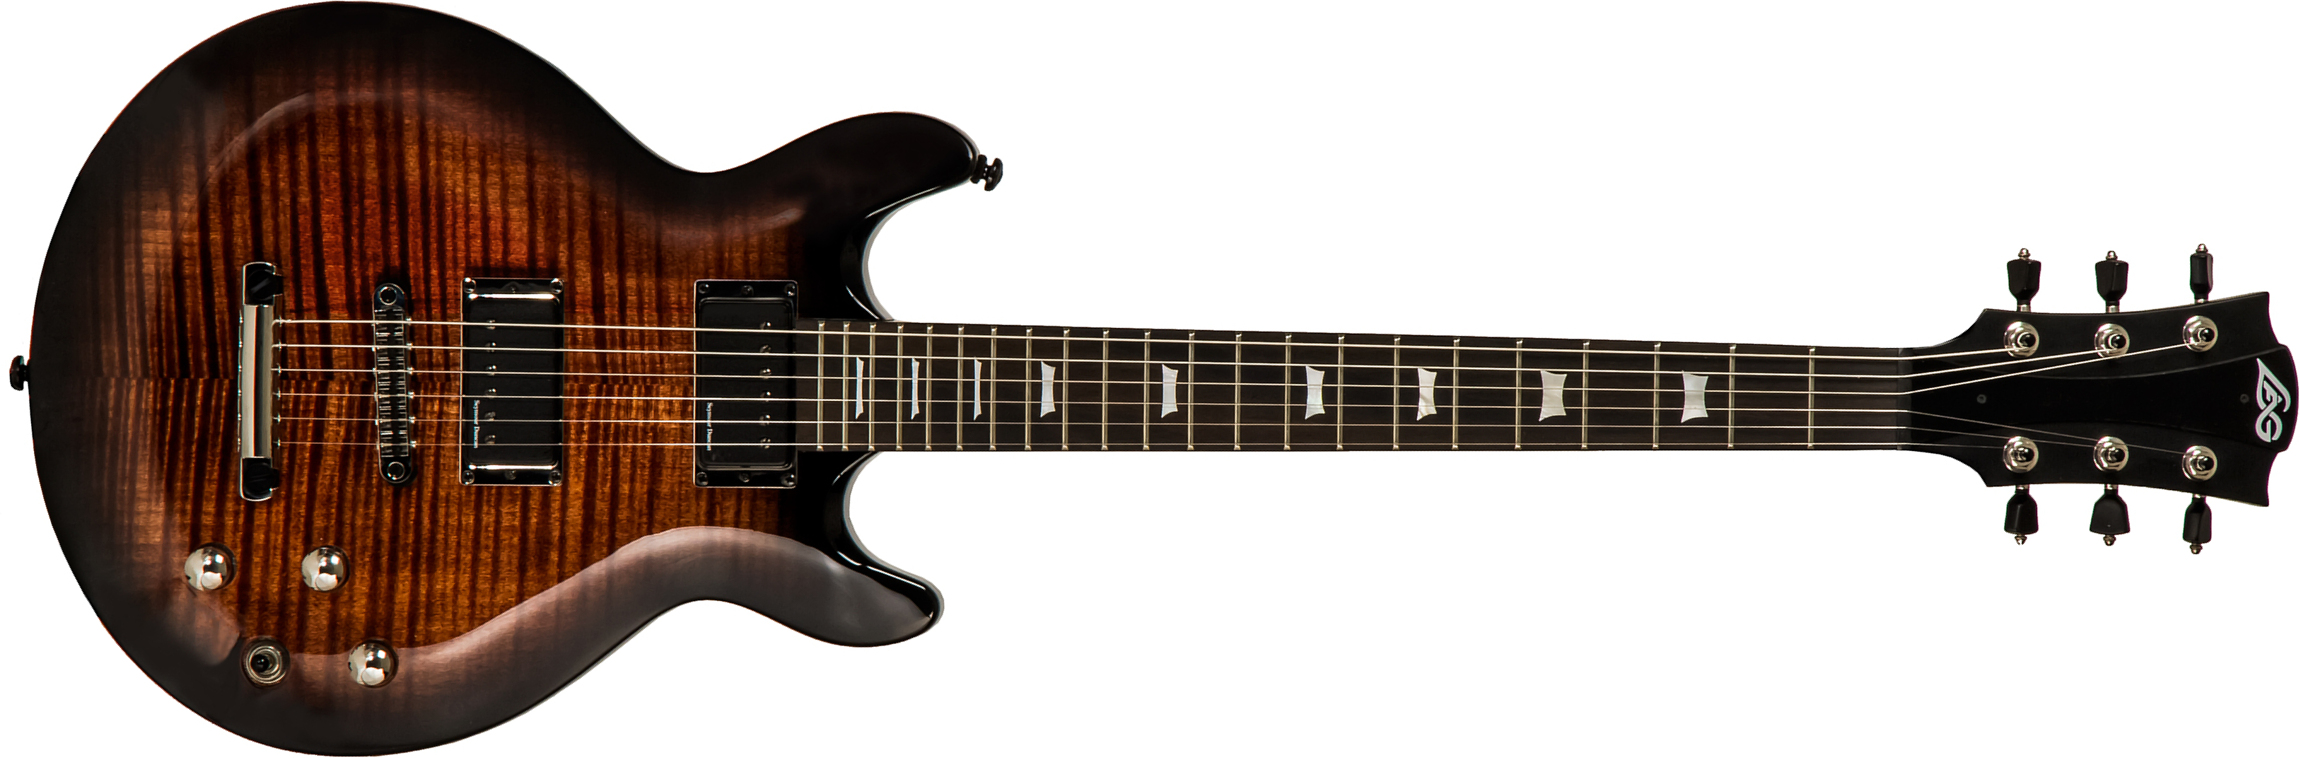 Lag Roxane R500 2h Seymour Duncan Ht Bw - Brown Shadow - Double cut electric guitar - Main picture